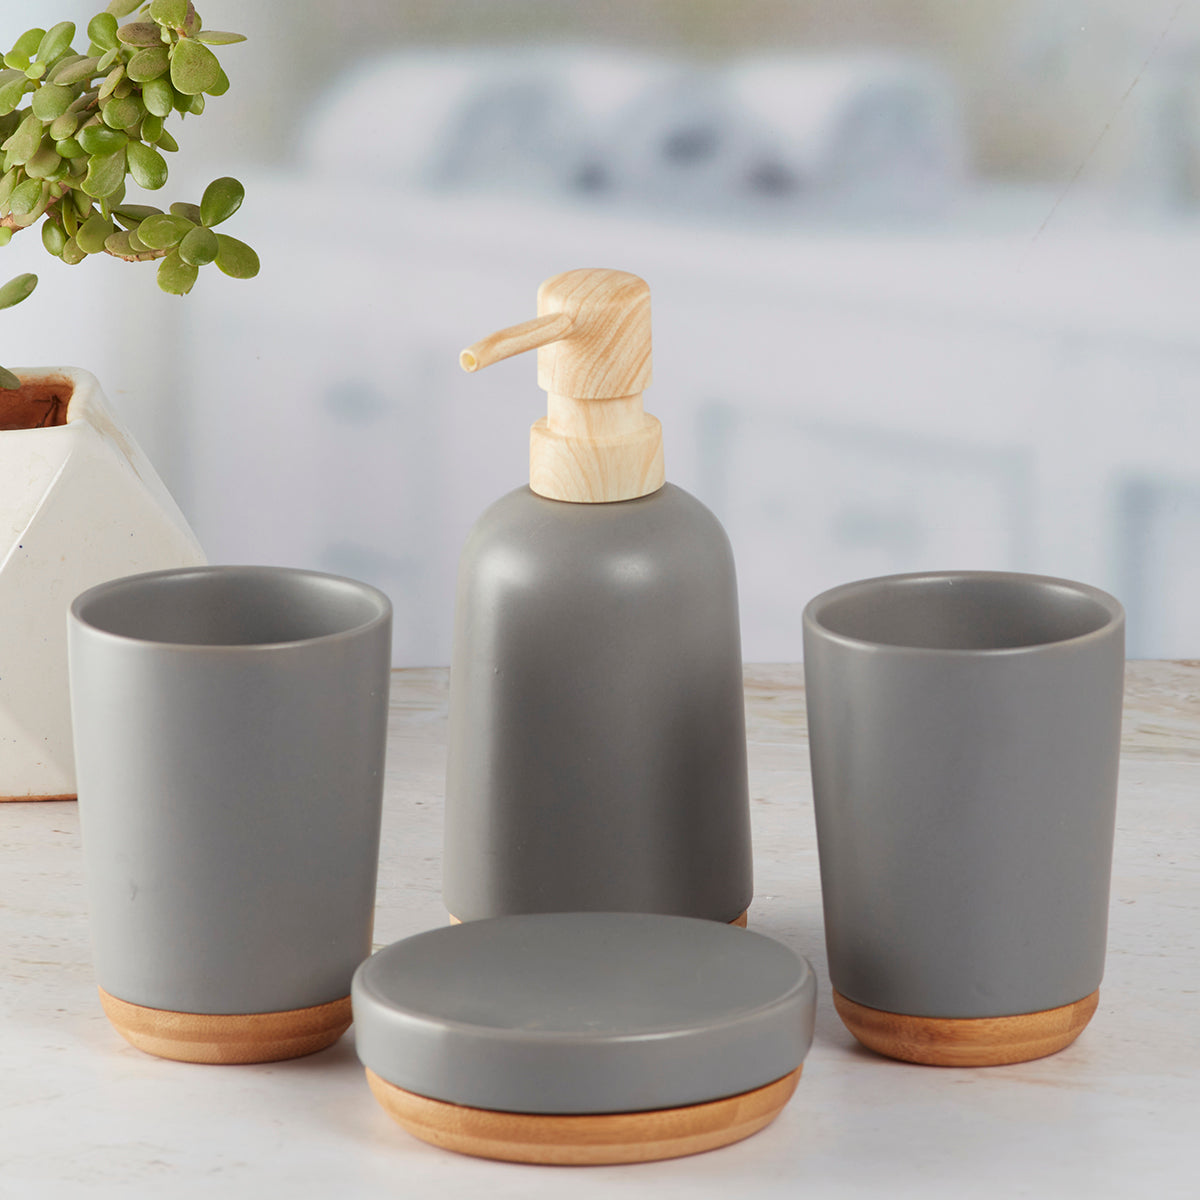 Ceramic Bathroom Accessories Set of 4 Bath Set with Soap Dispenser (9625)